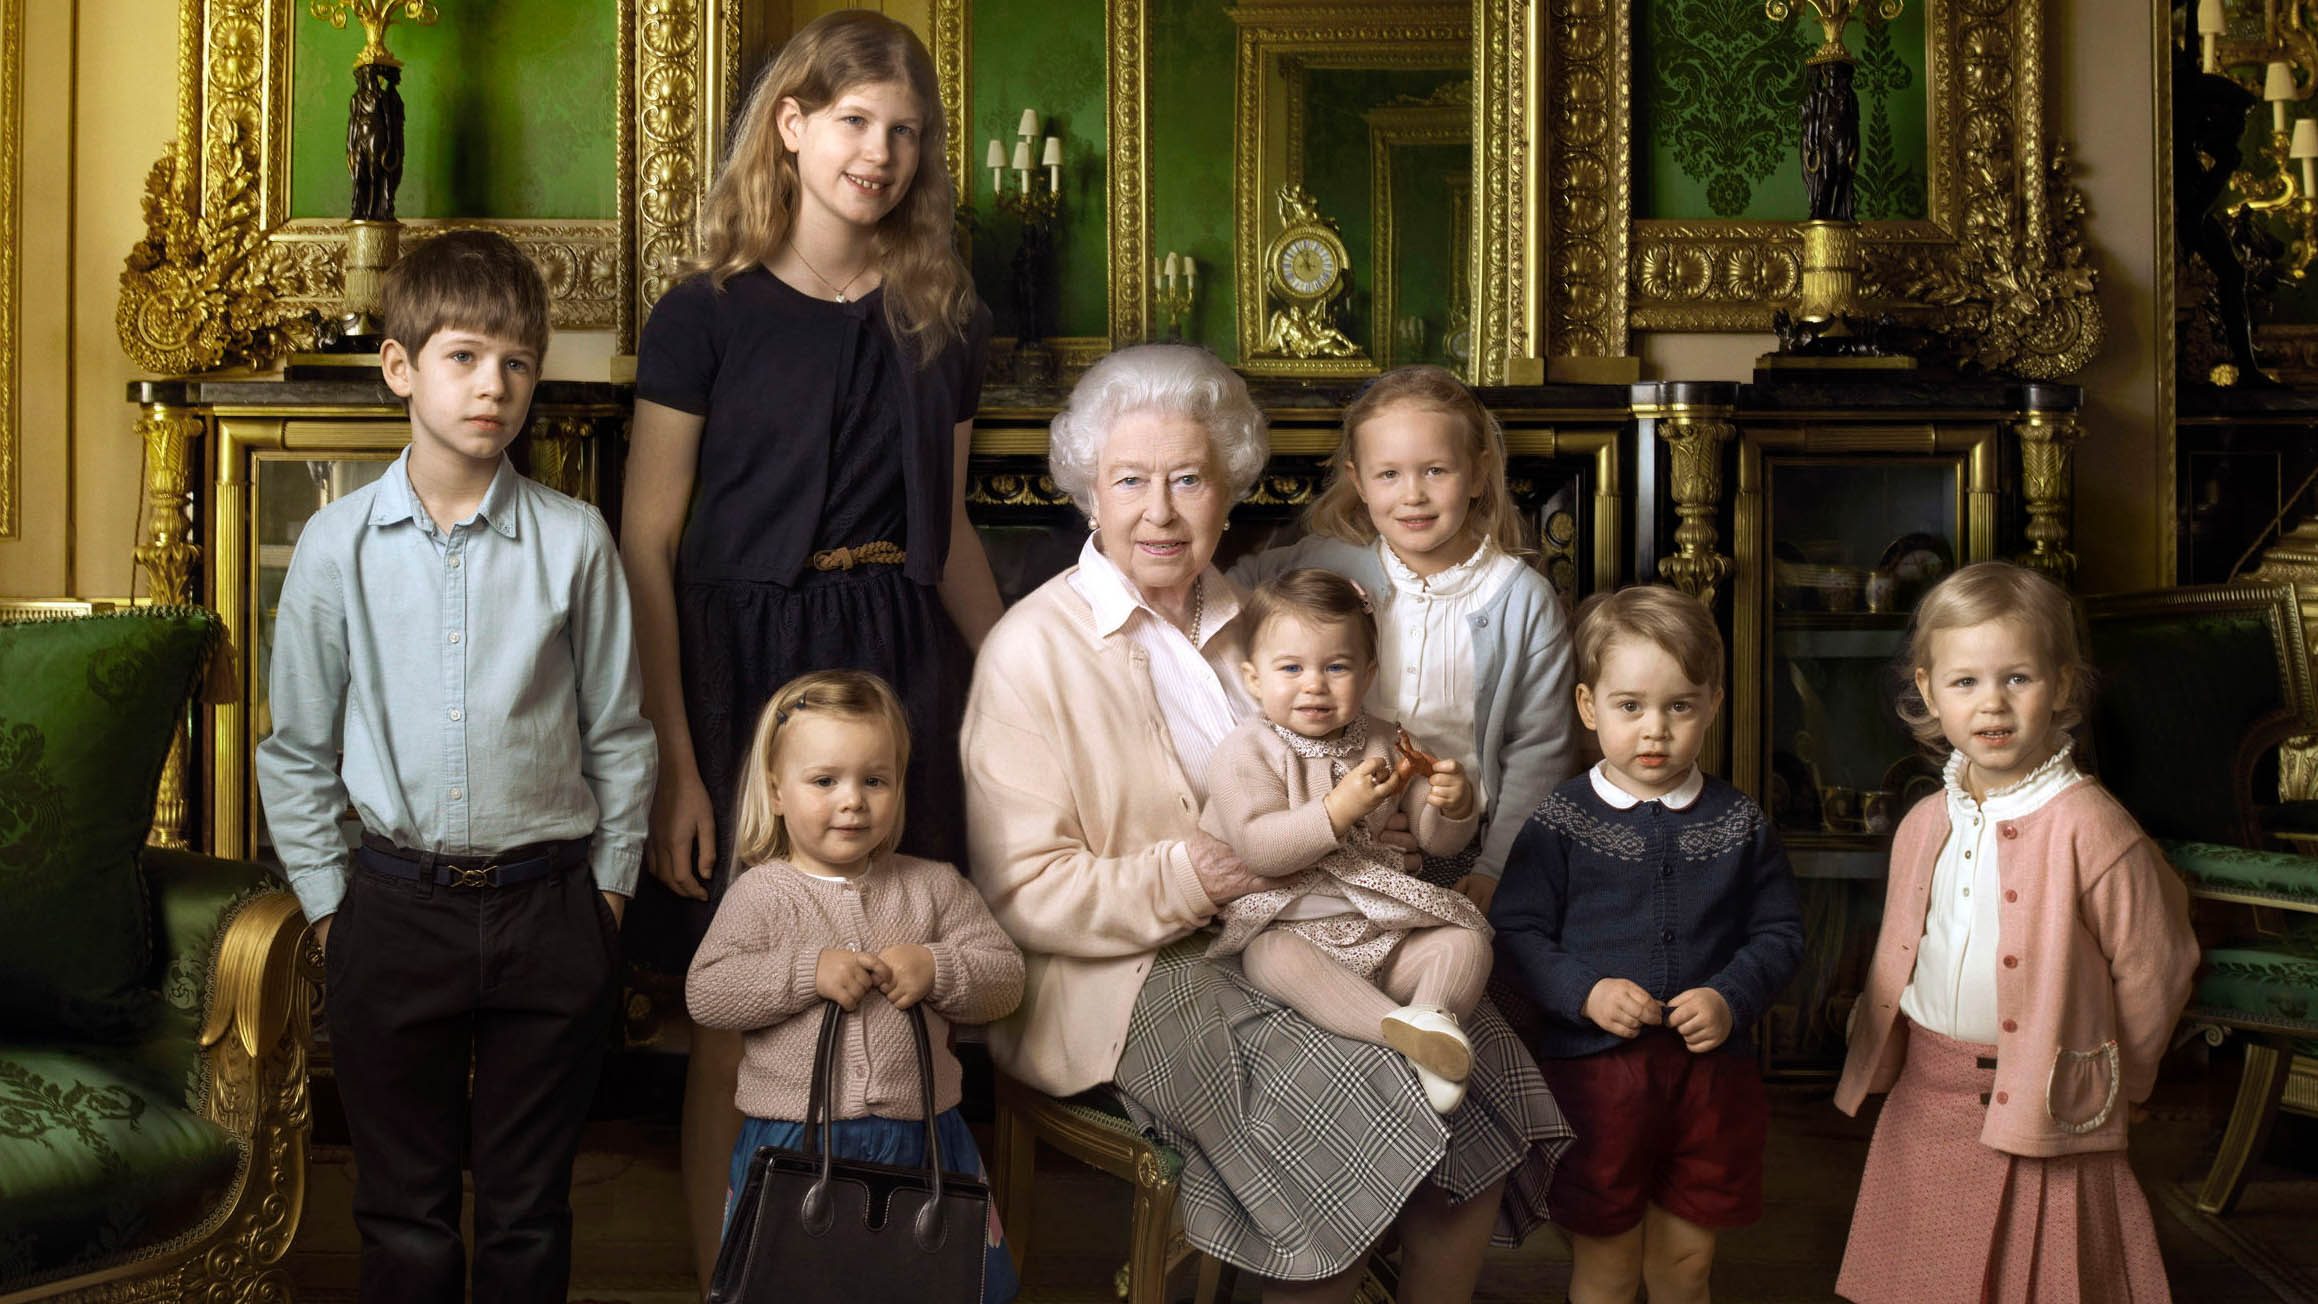 IN PHOTOS: Queen Elizabeth II’s 90th birthday portraits